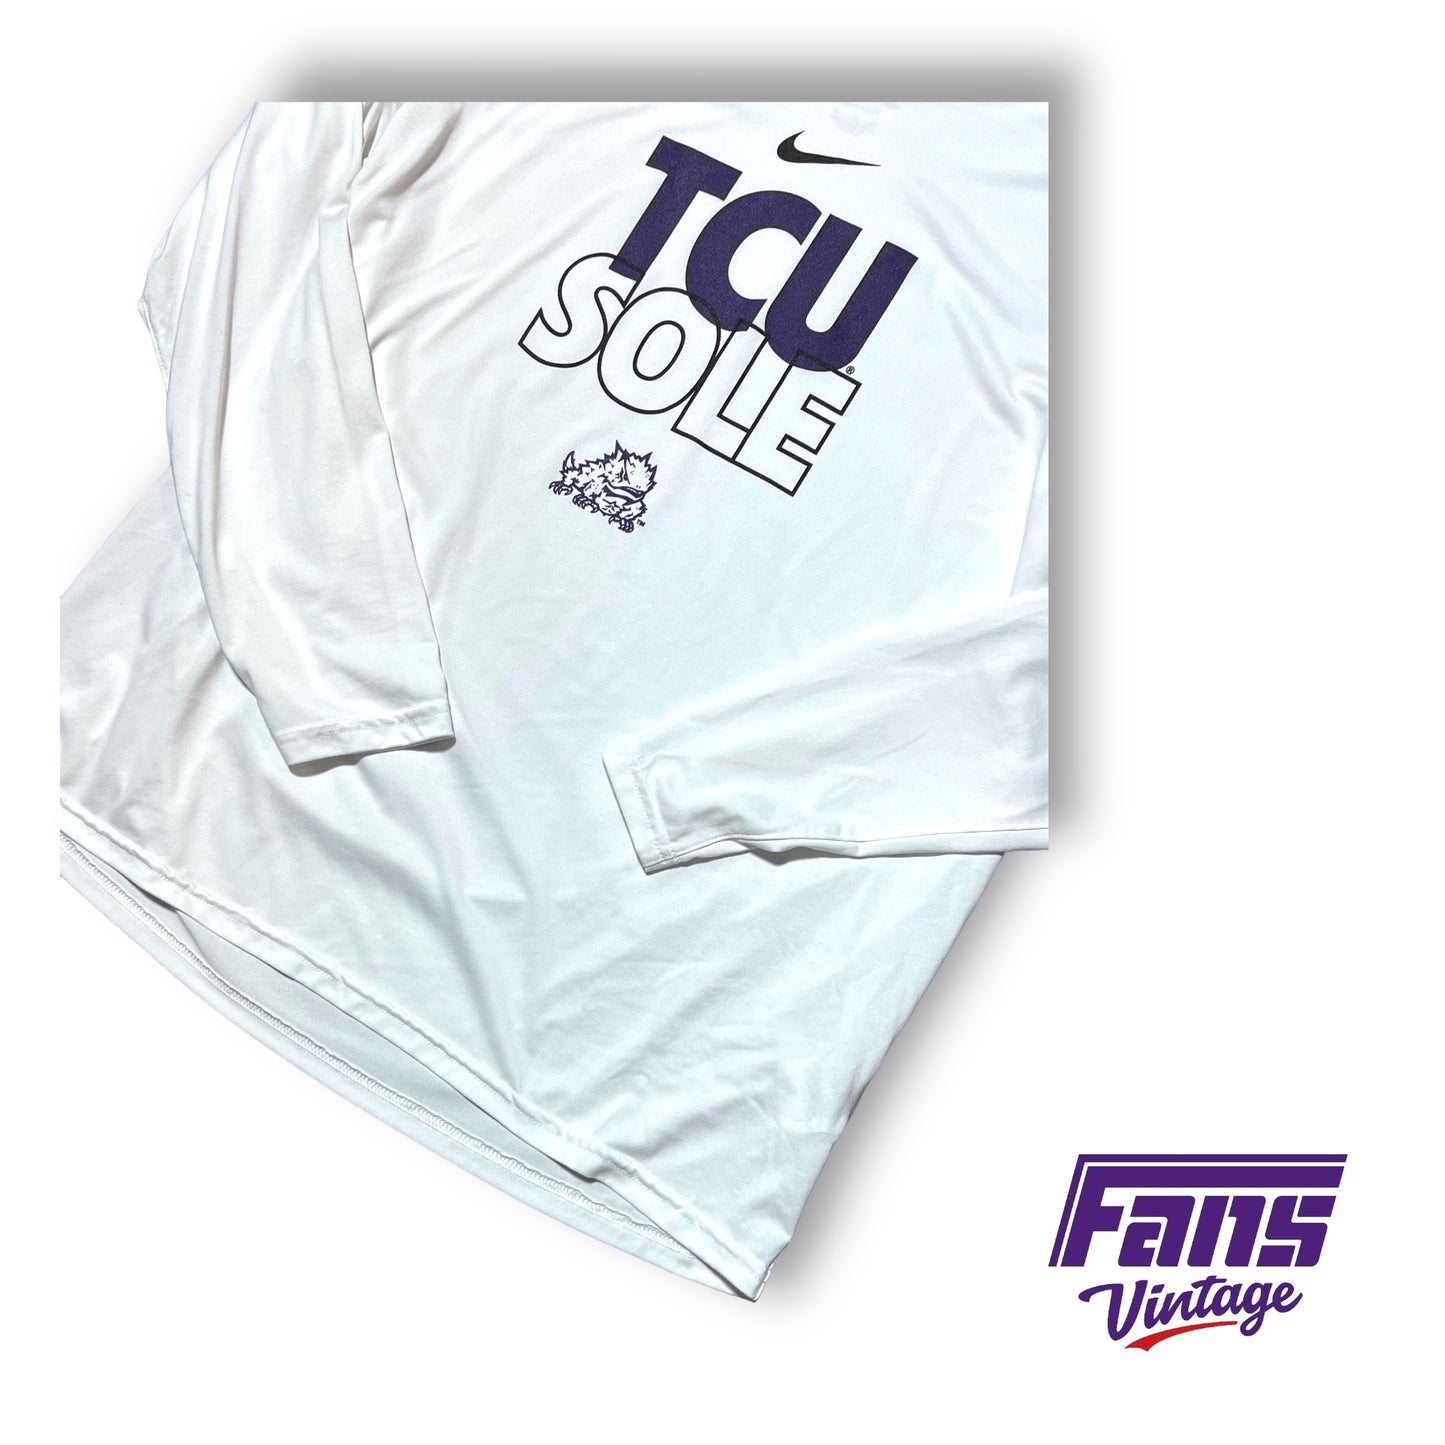 TCU Basketball March Madness Team Issue Sideline Warmup Tee - “TCU SOLE” Nike Drifit